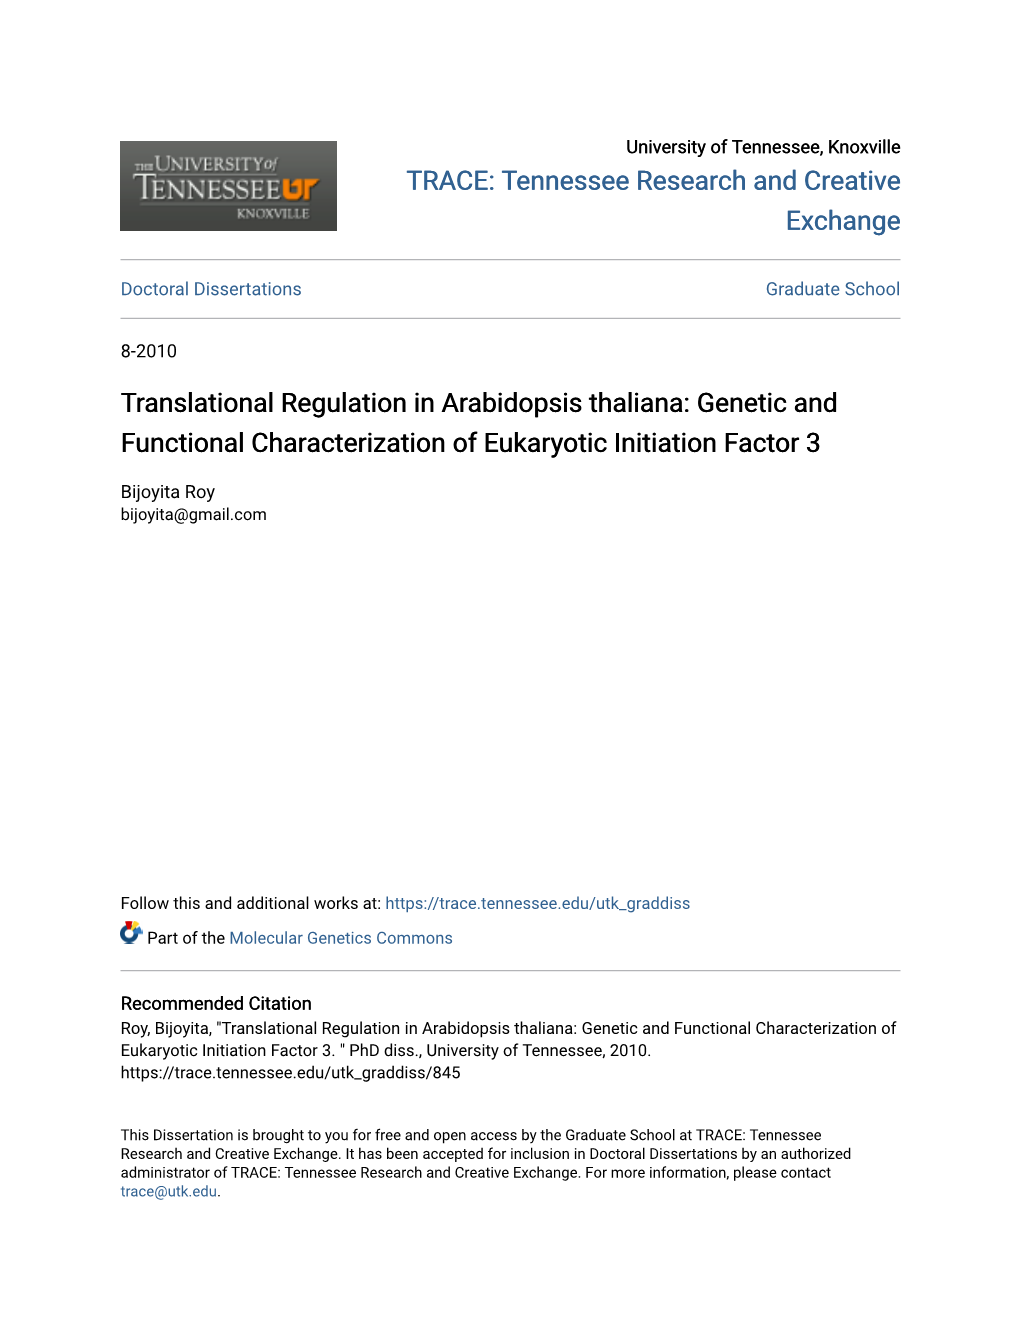 Translational Regulation in Arabidopsis Thaliana: Genetic and Functional Characterization of Eukaryotic Initiation Factor 3